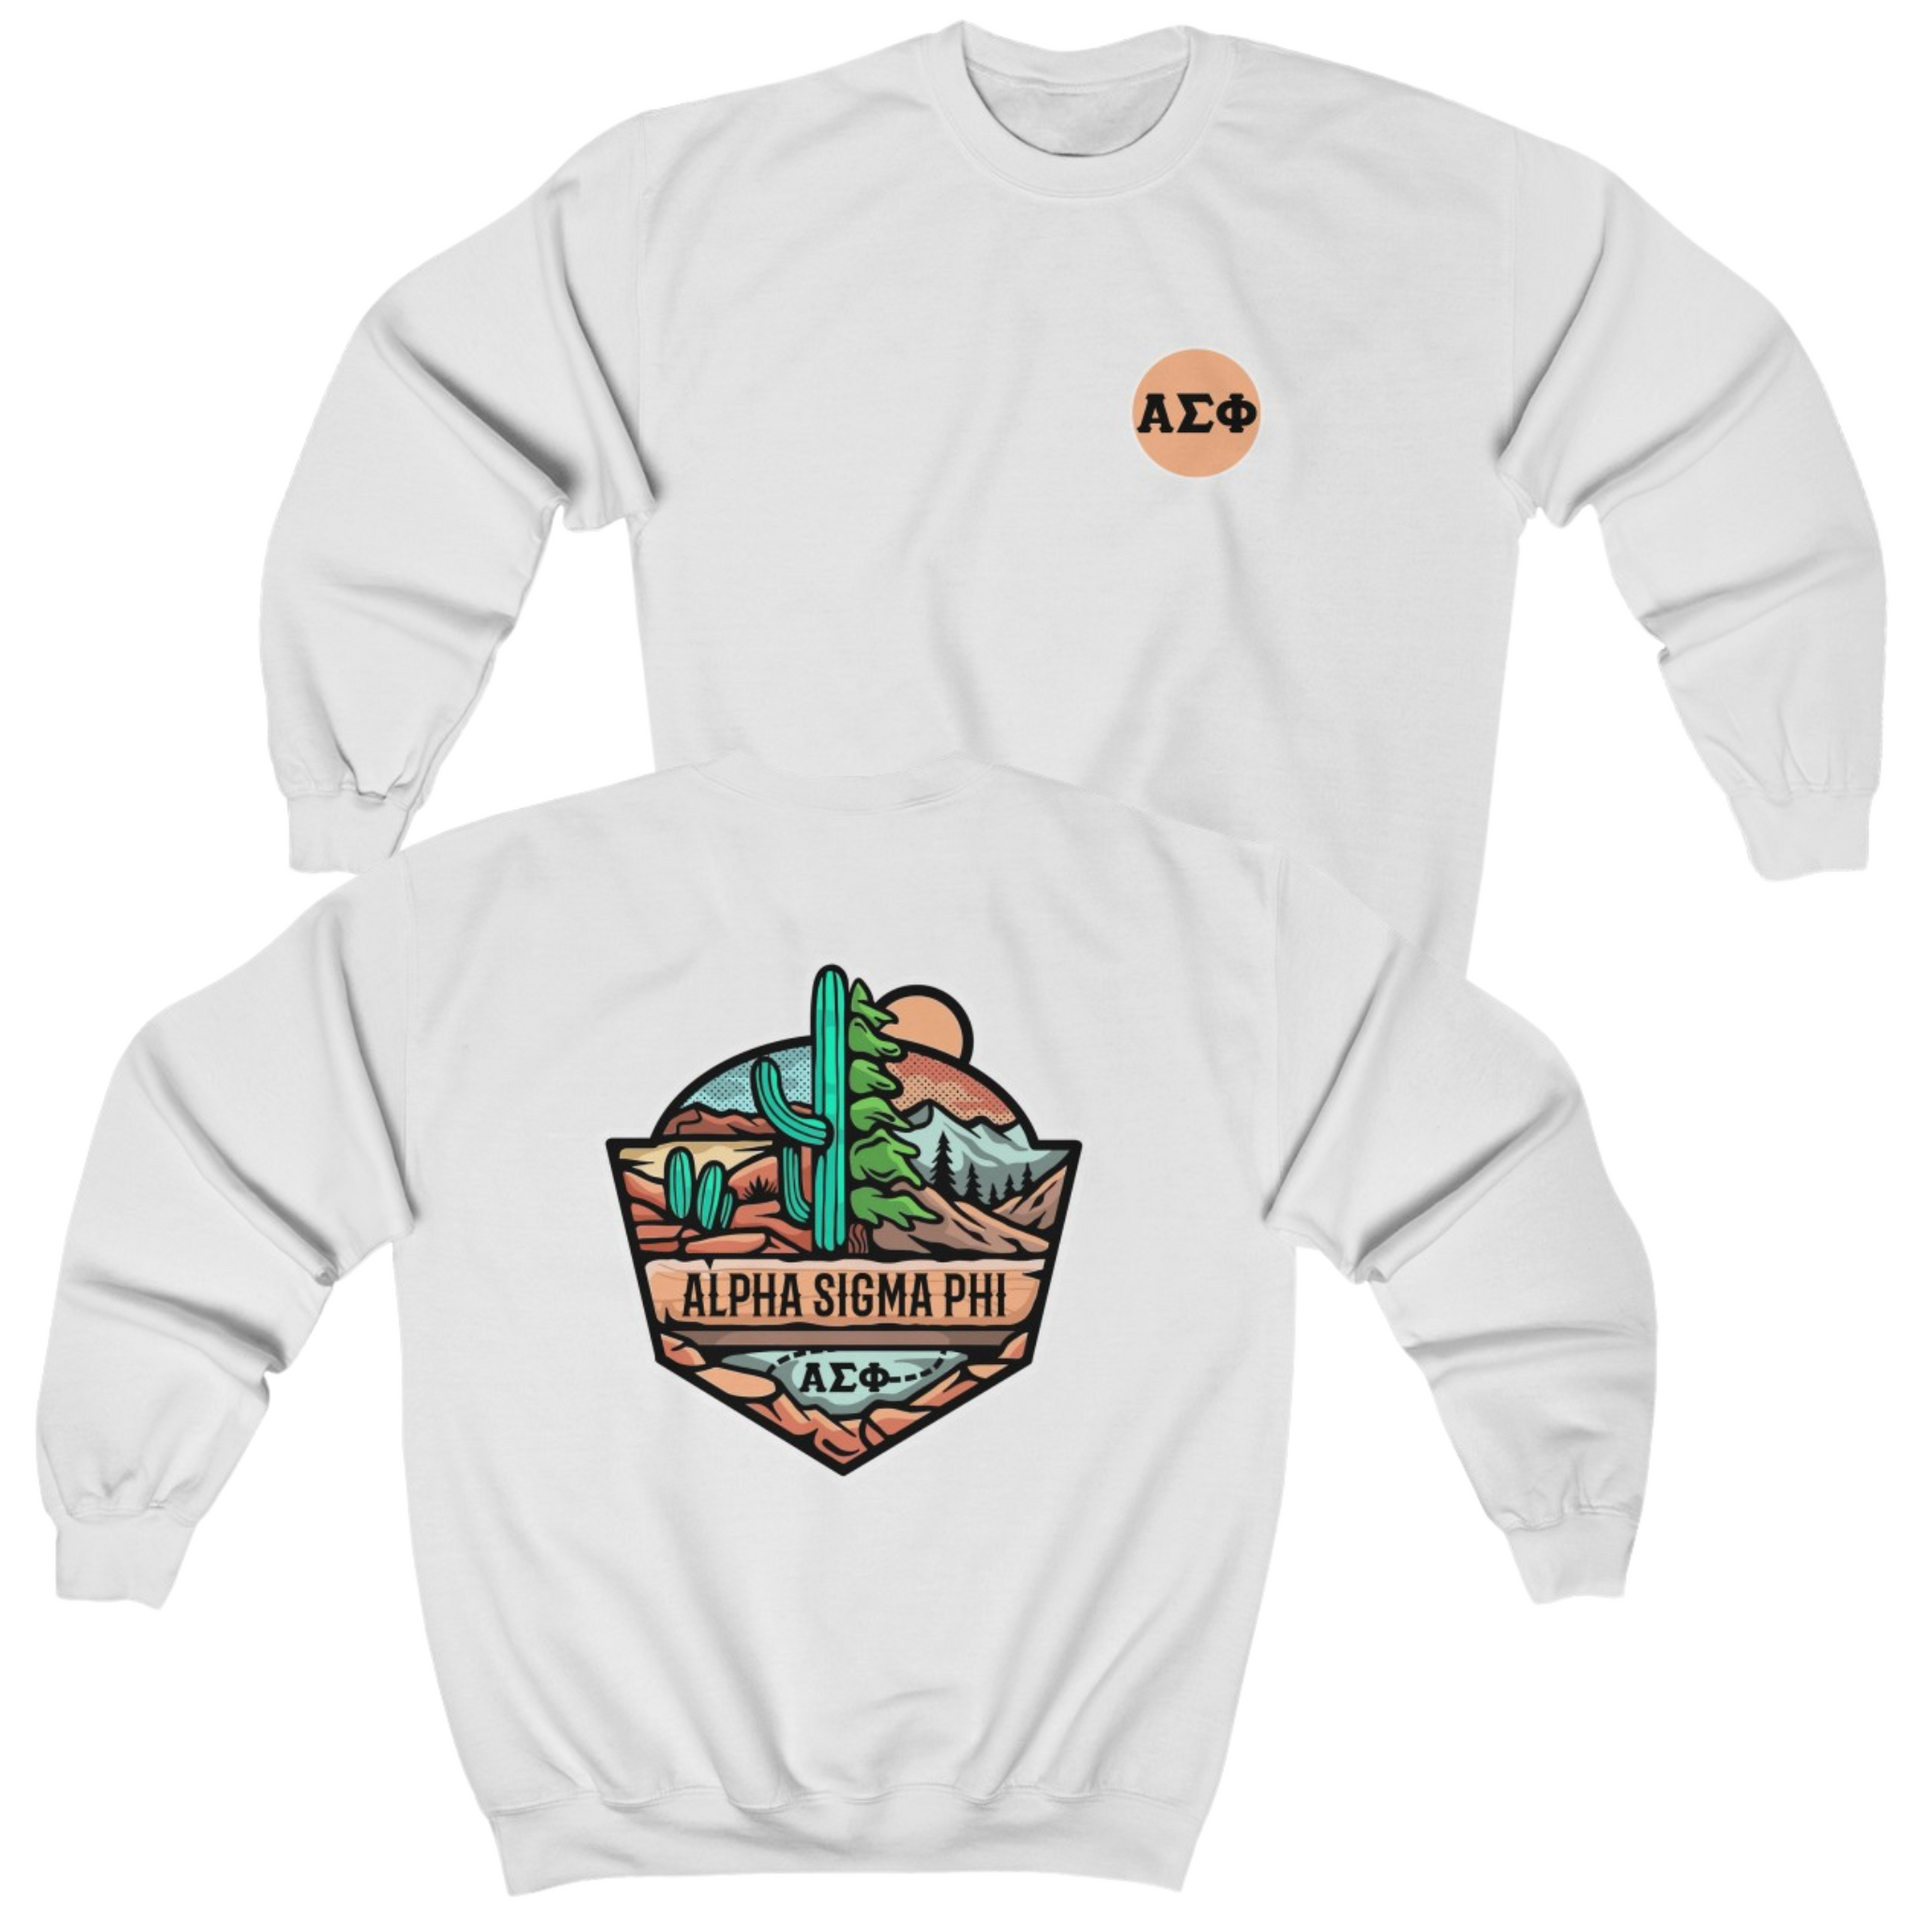 White Alpha Sigma Phi Graphic Crewneck Sweatshirt | Desert Mountains | Alpha Sigma Phi Fraternity Shirt